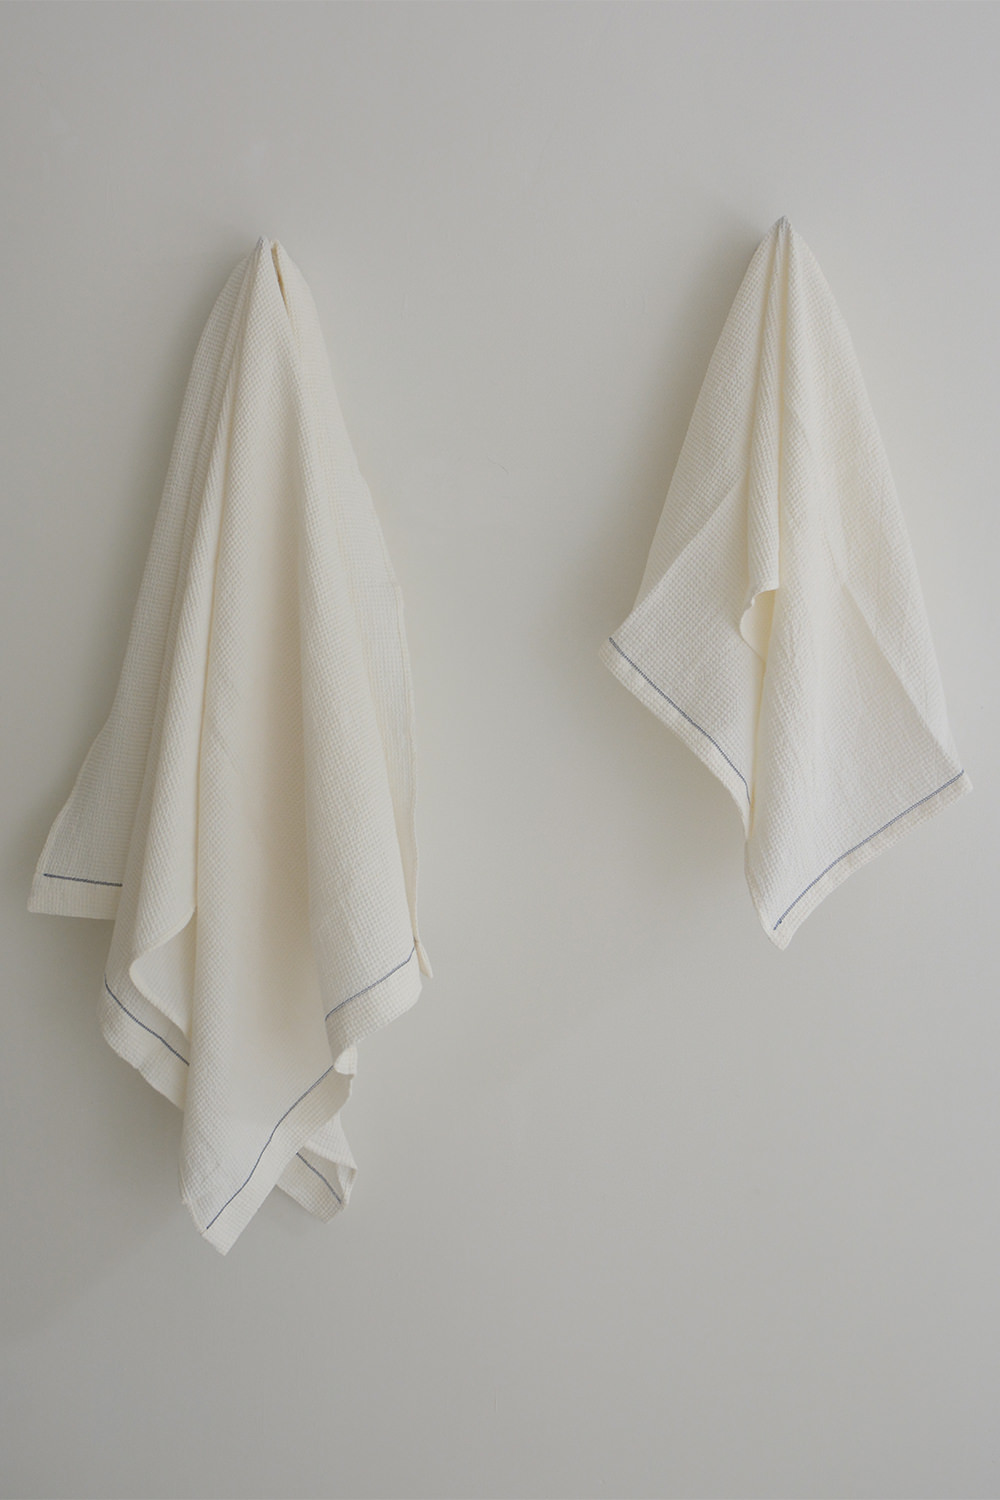 Cattana Chiarastella, Bath and Hand Towel Top Picture.